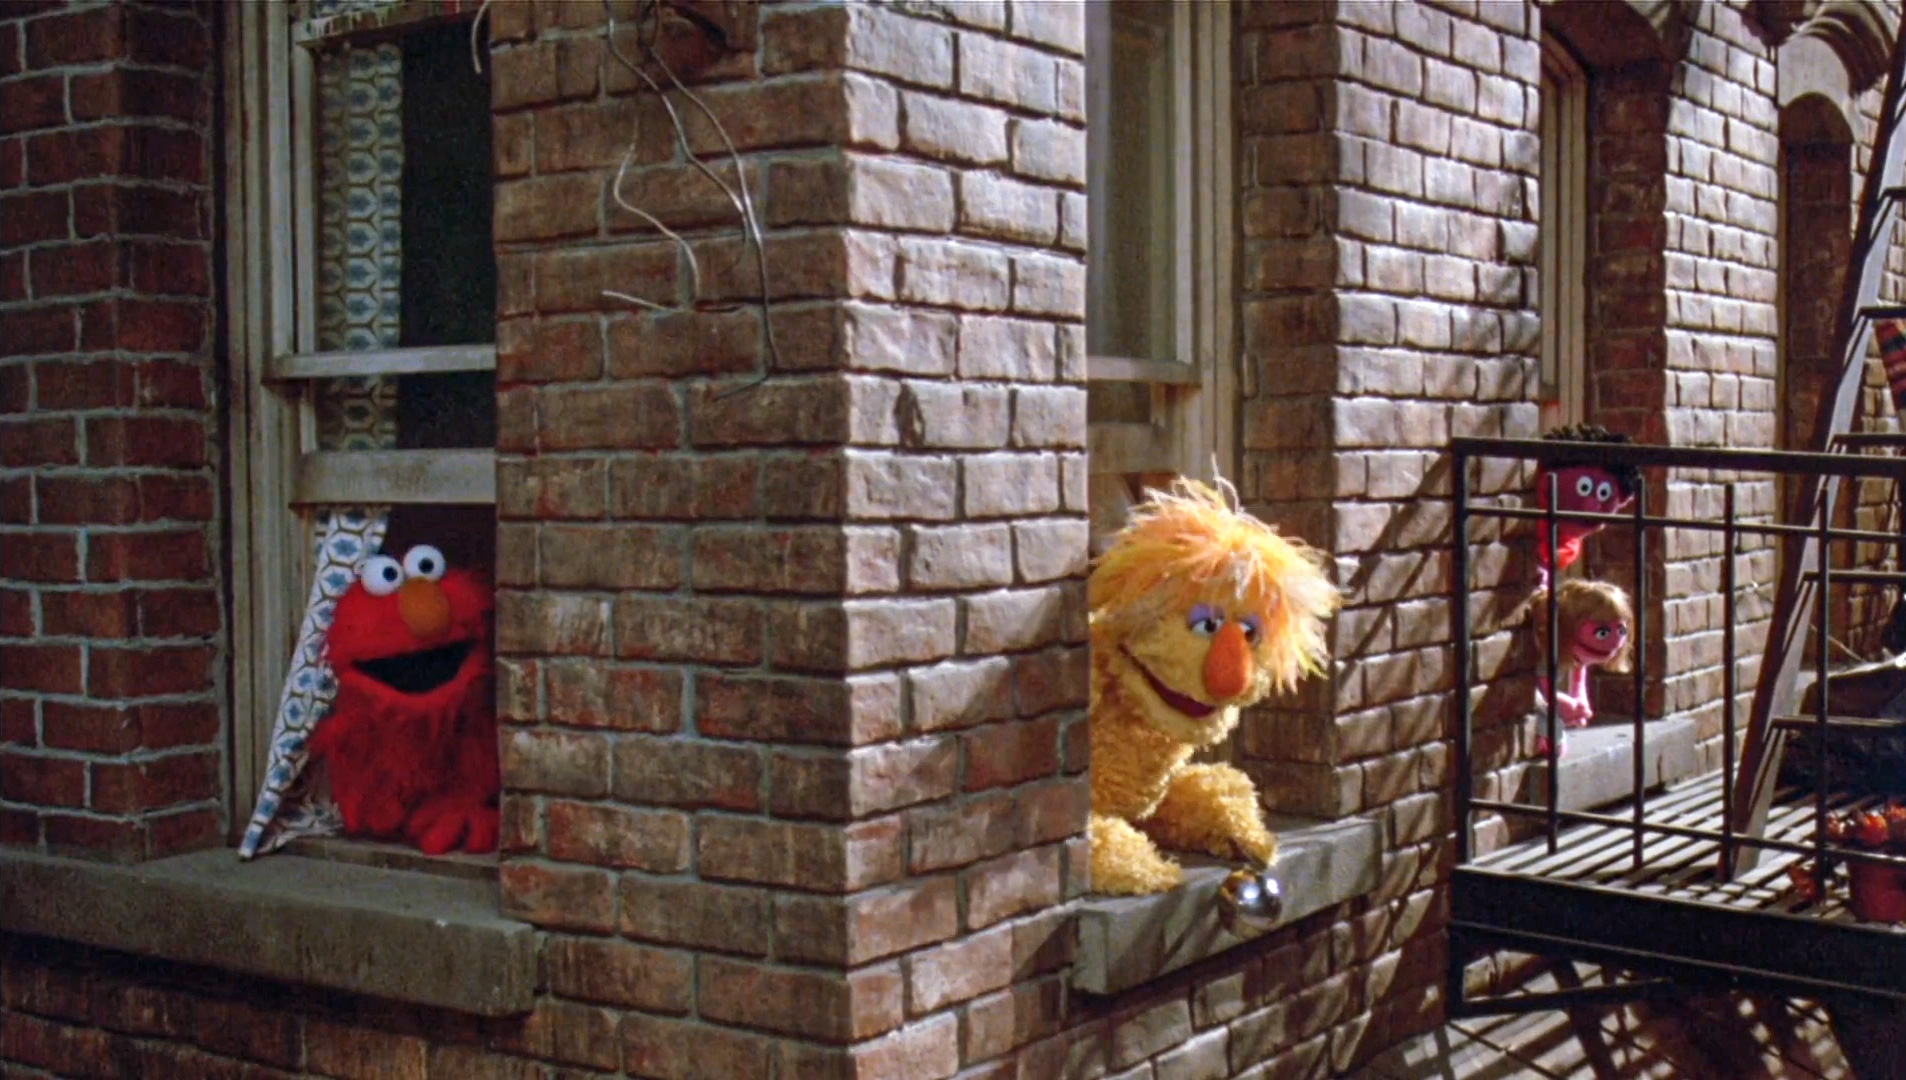 Elmo In Grouchland Huxley Scene